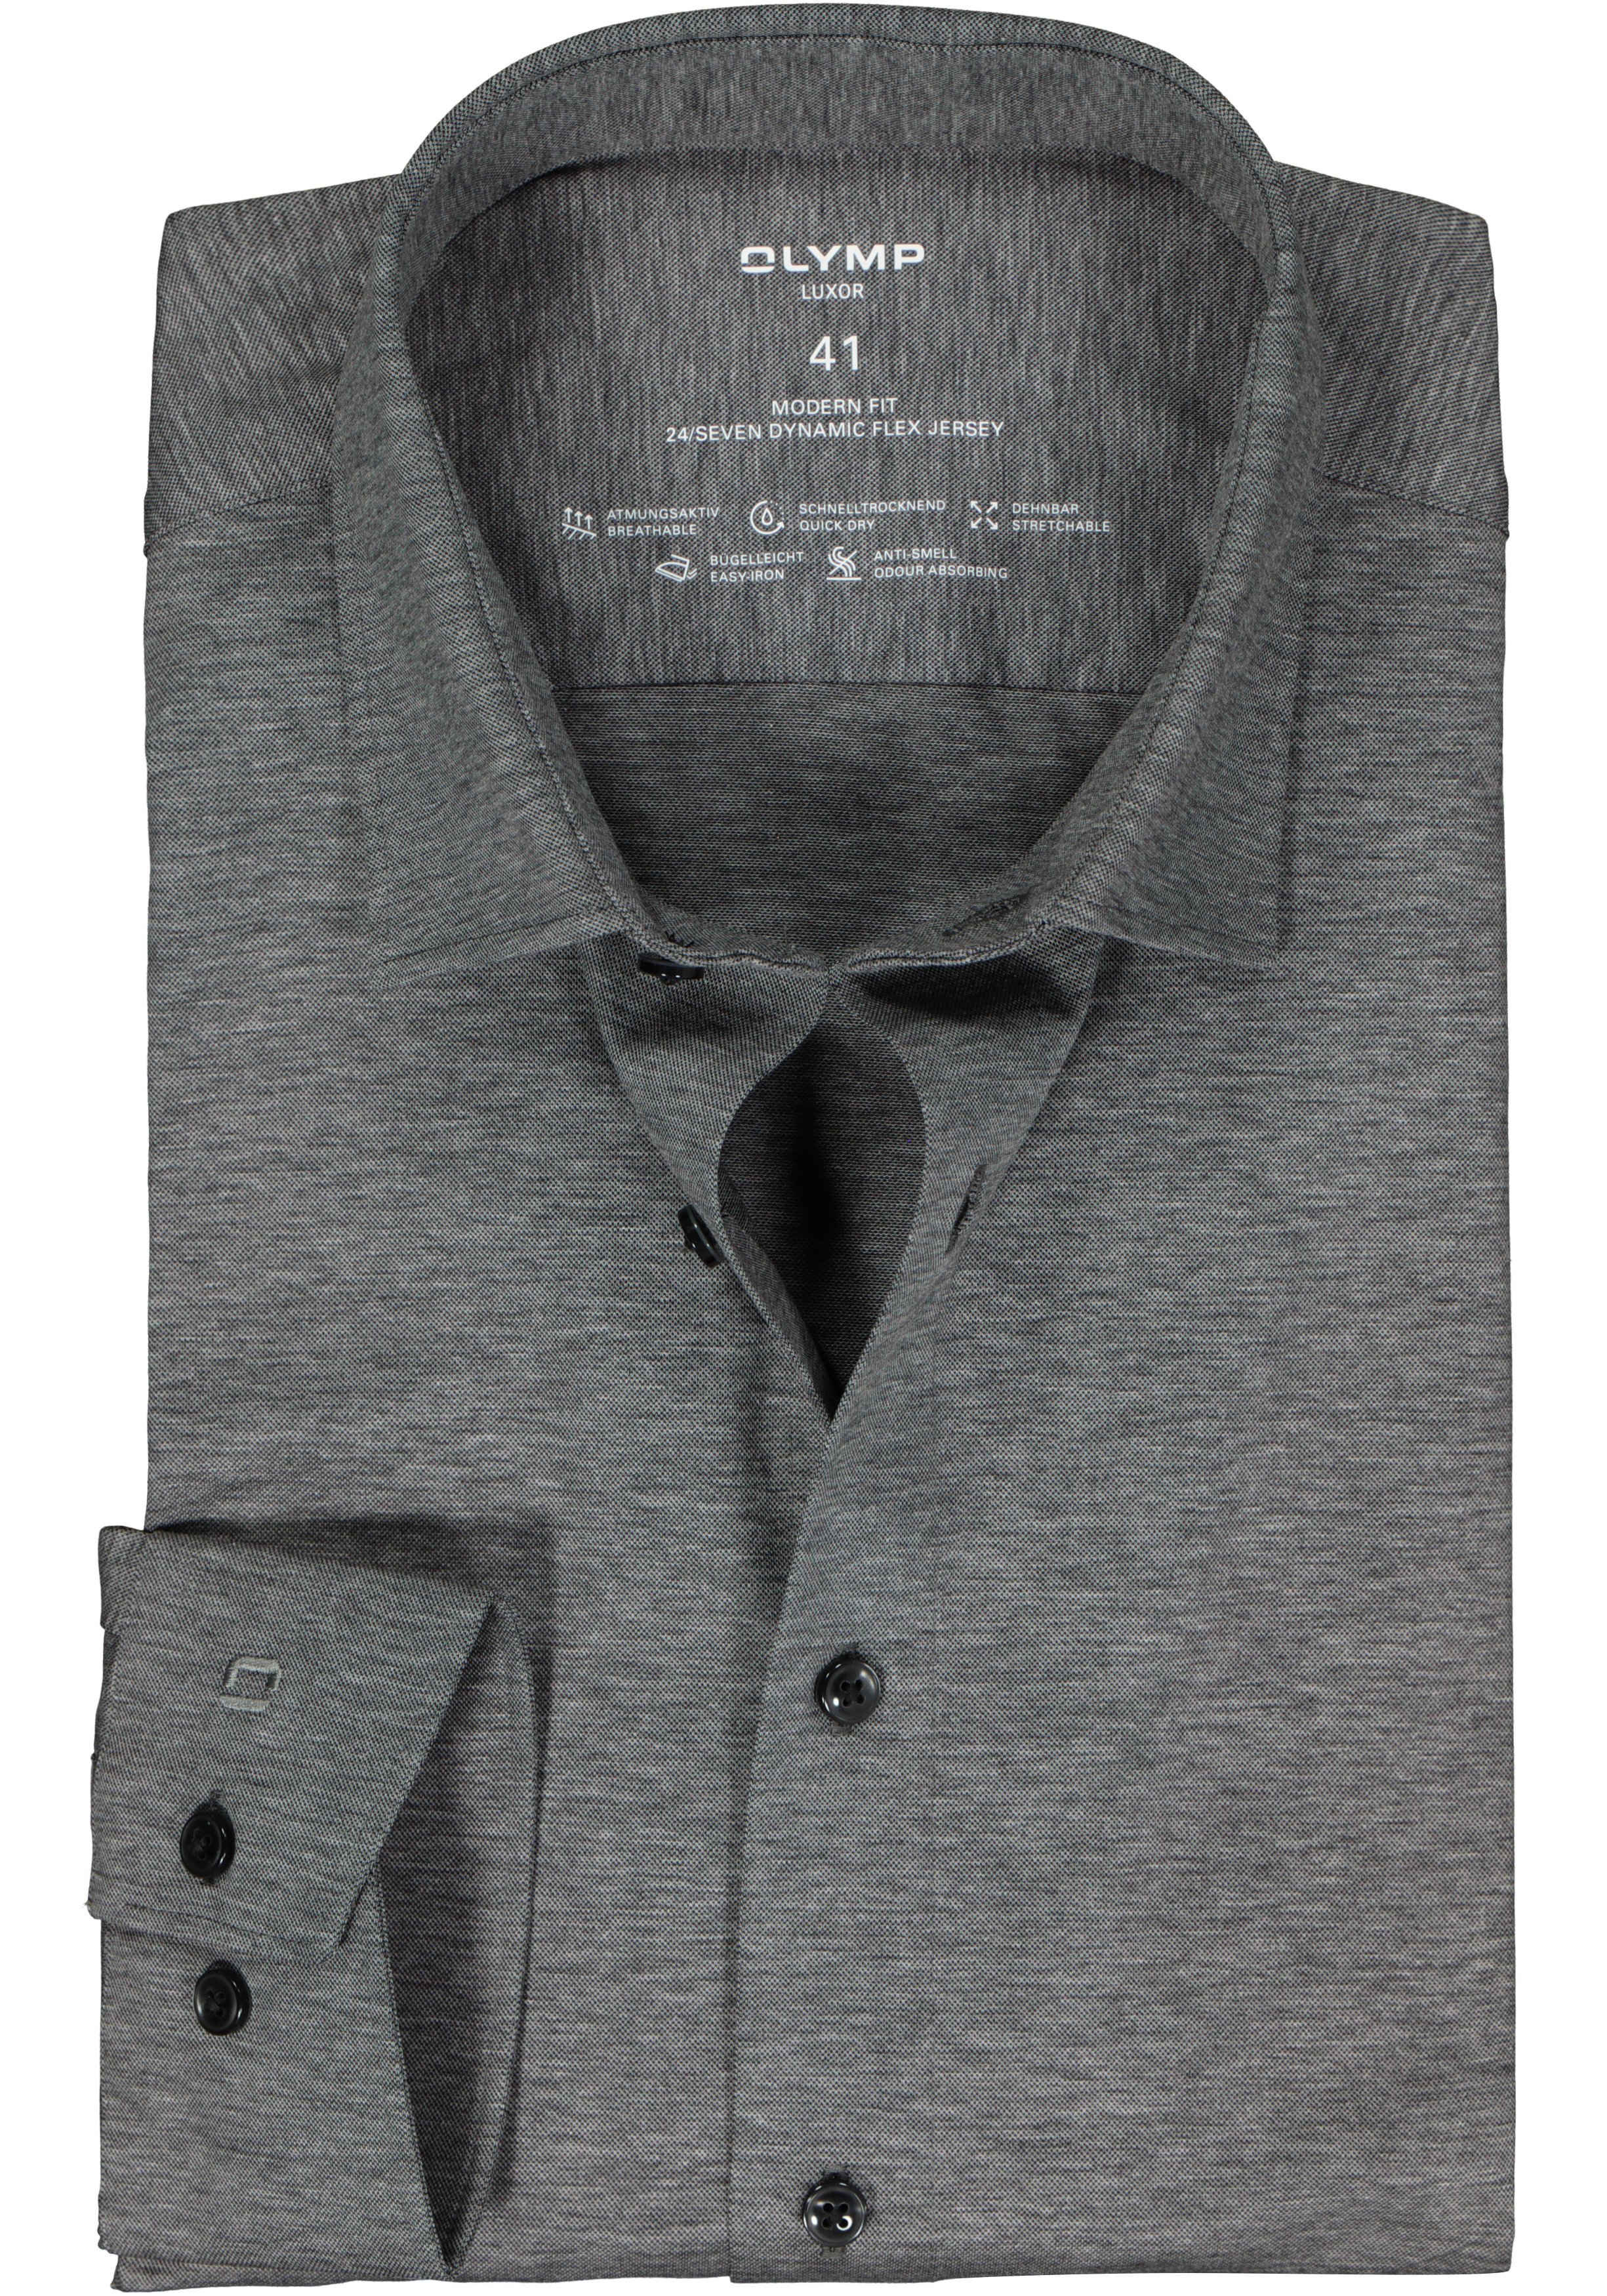 OLYMP 24/7 modern fit overhemd, tricot, antraciet grijs